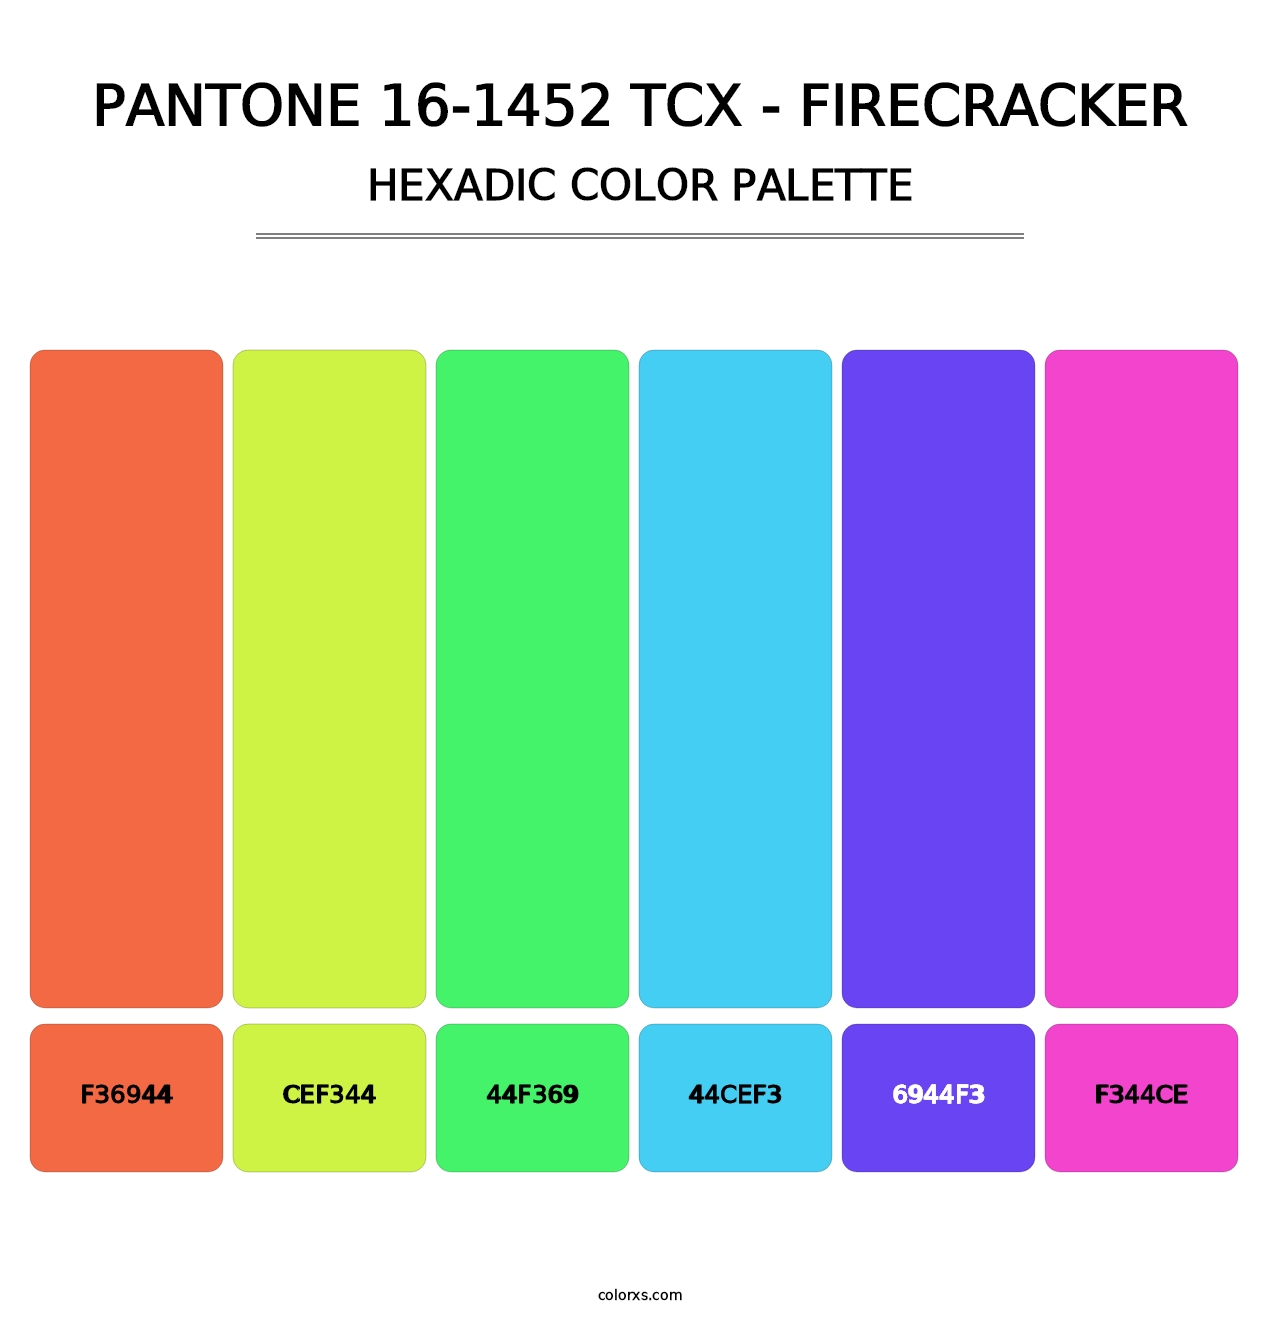 PANTONE 16-1452 TCX - Firecracker - Hexadic Color Palette